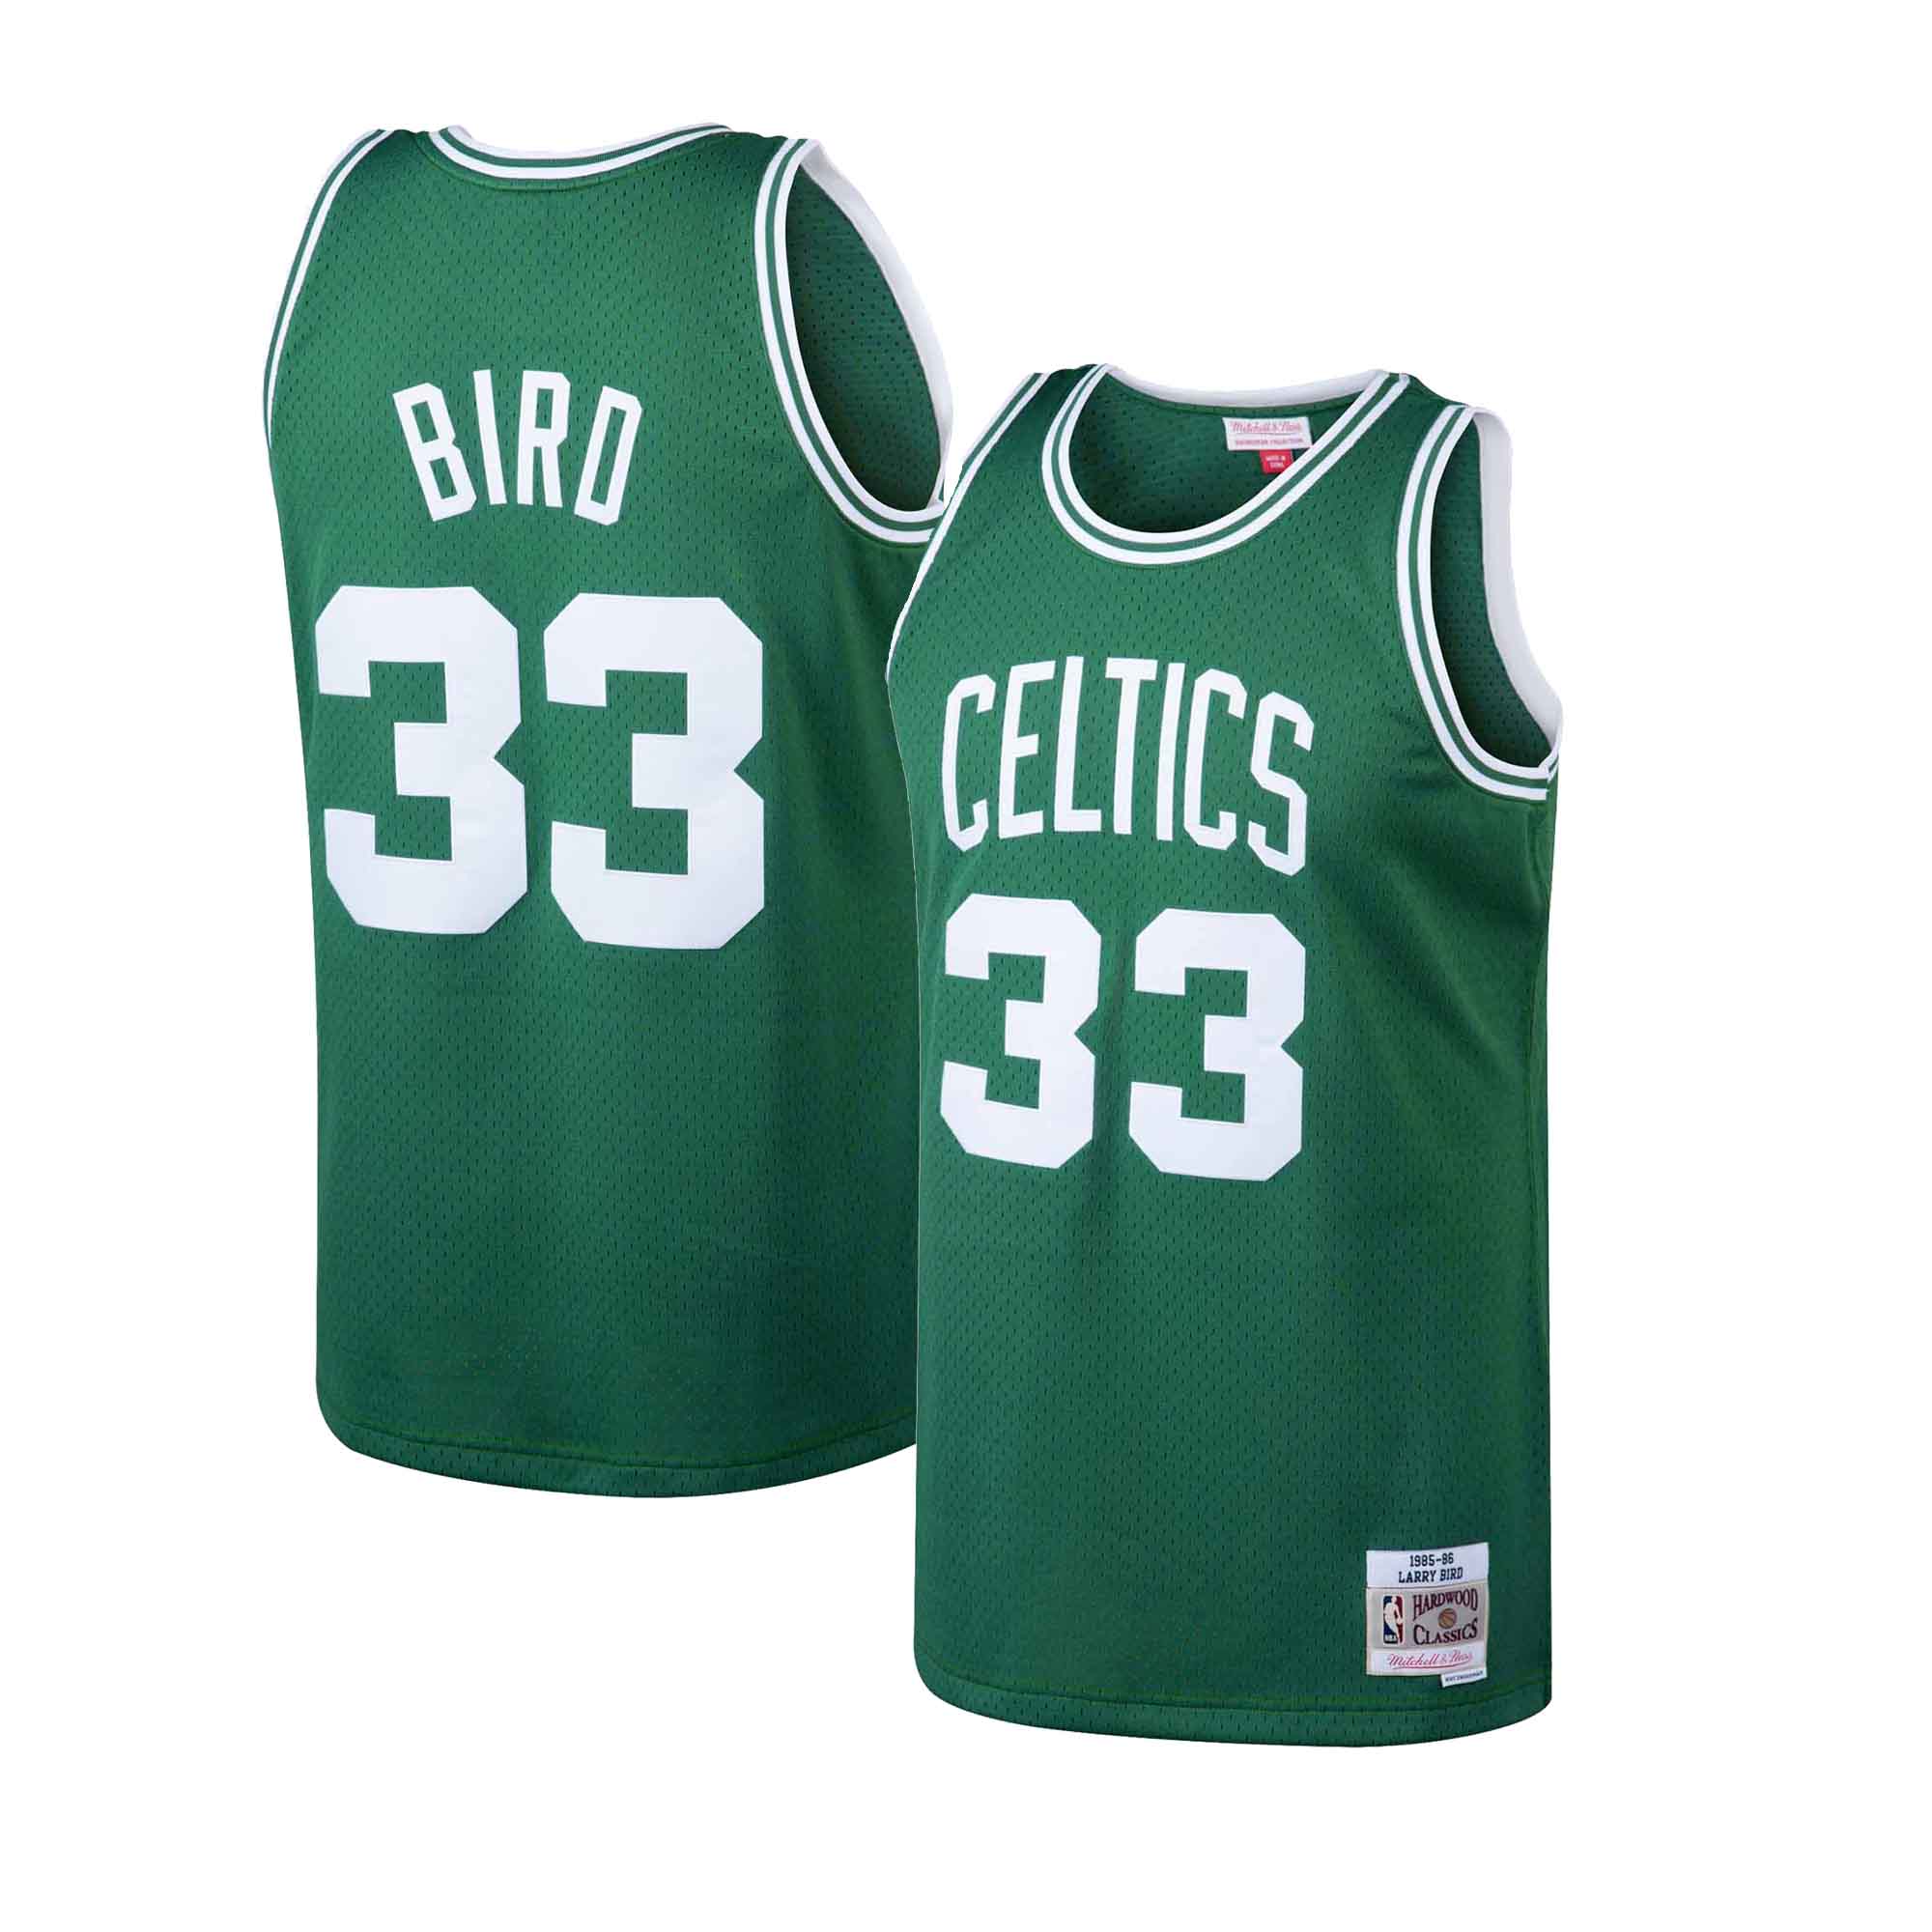 Authentic Jersey Boston Celtics Road 1985-86 Larry Bird - Shop